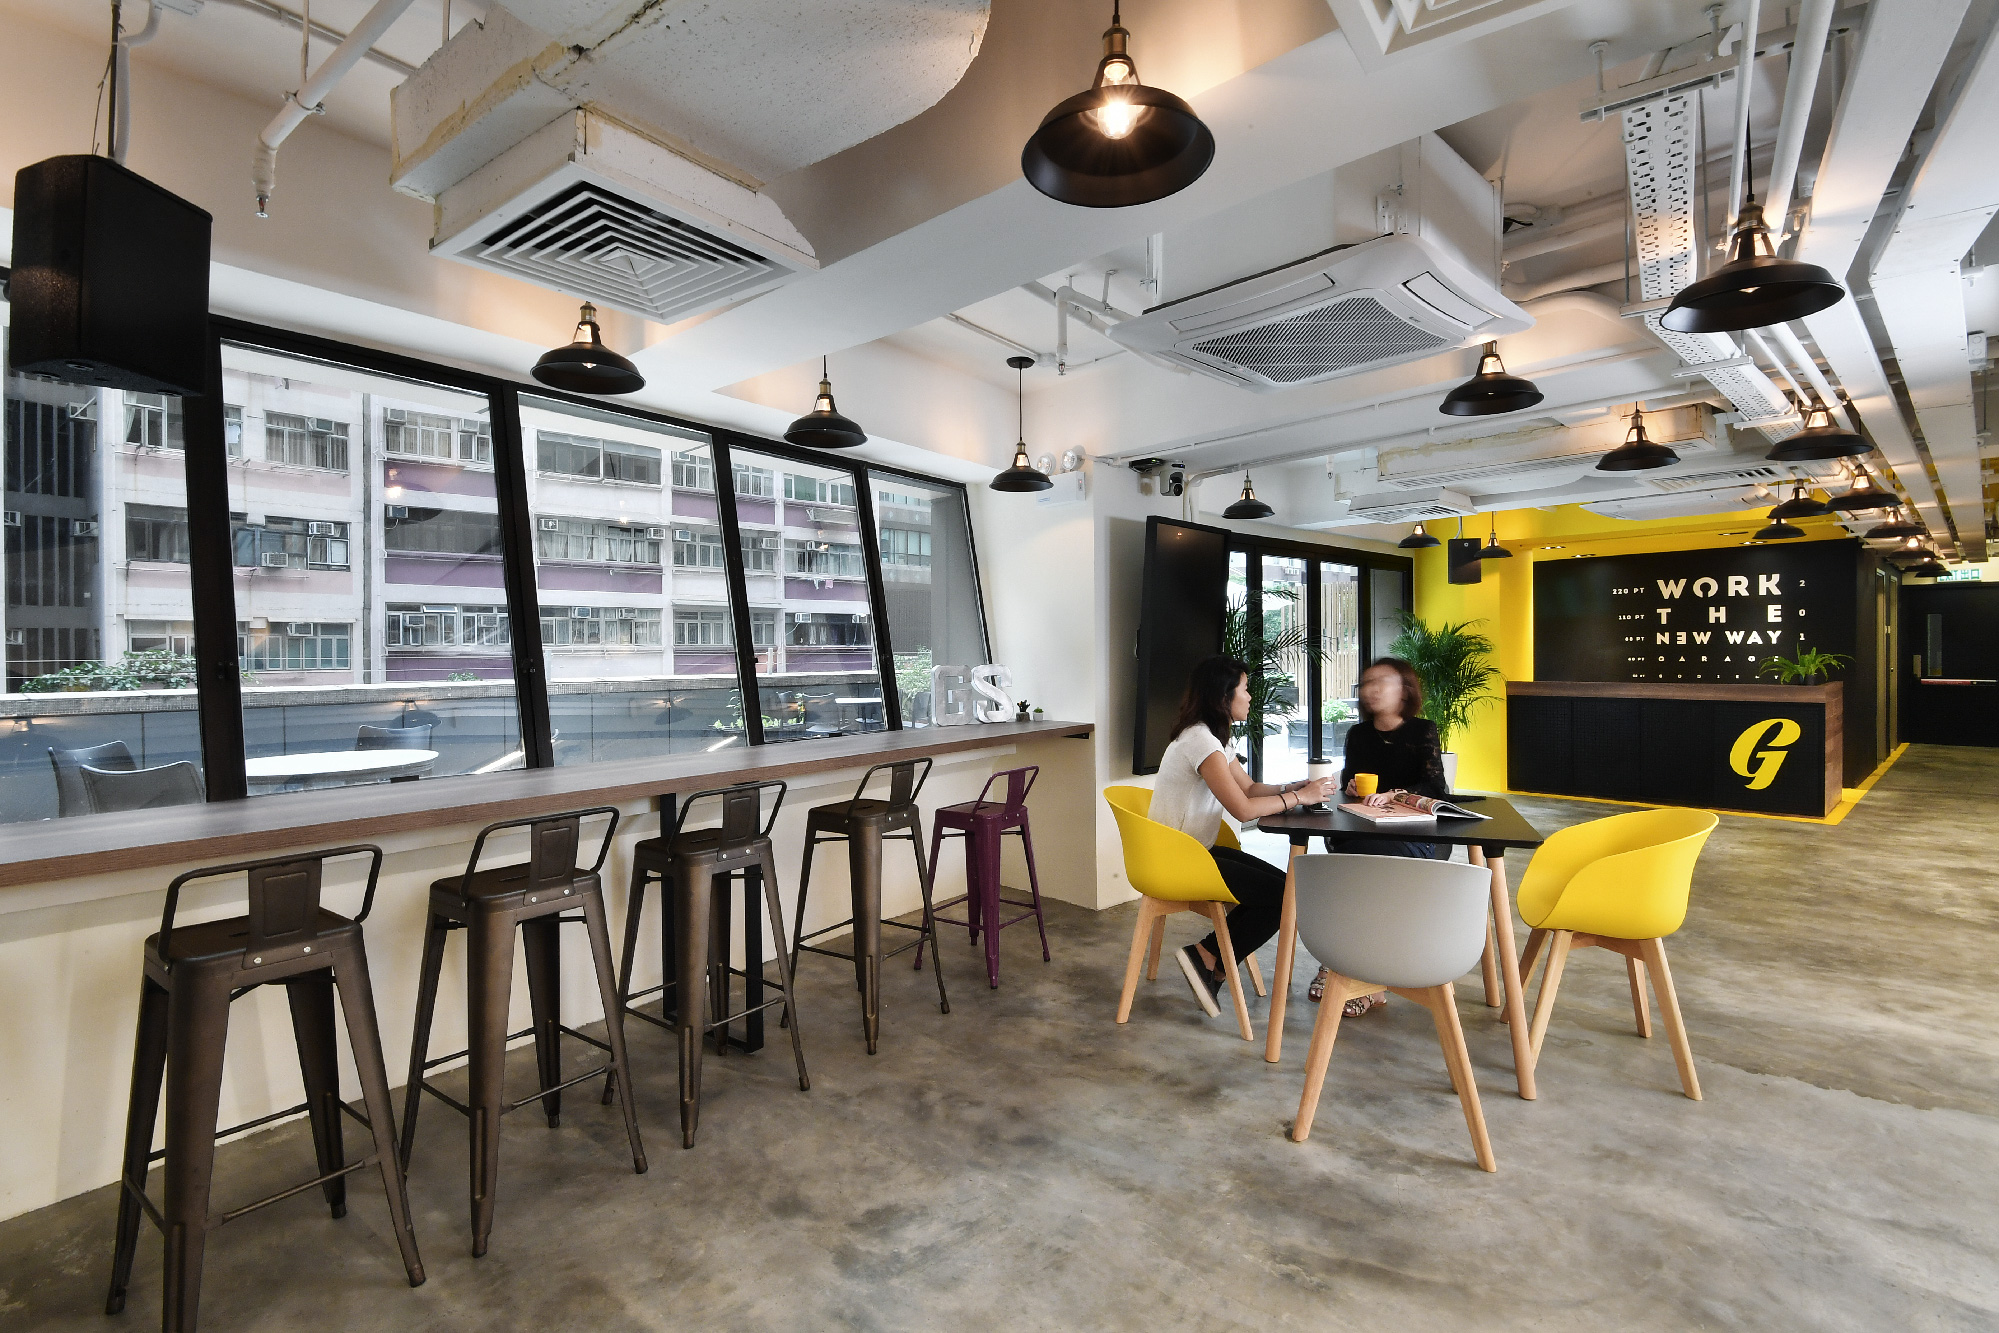 Gartner’s office interior: bridging the gap between technology and business needs